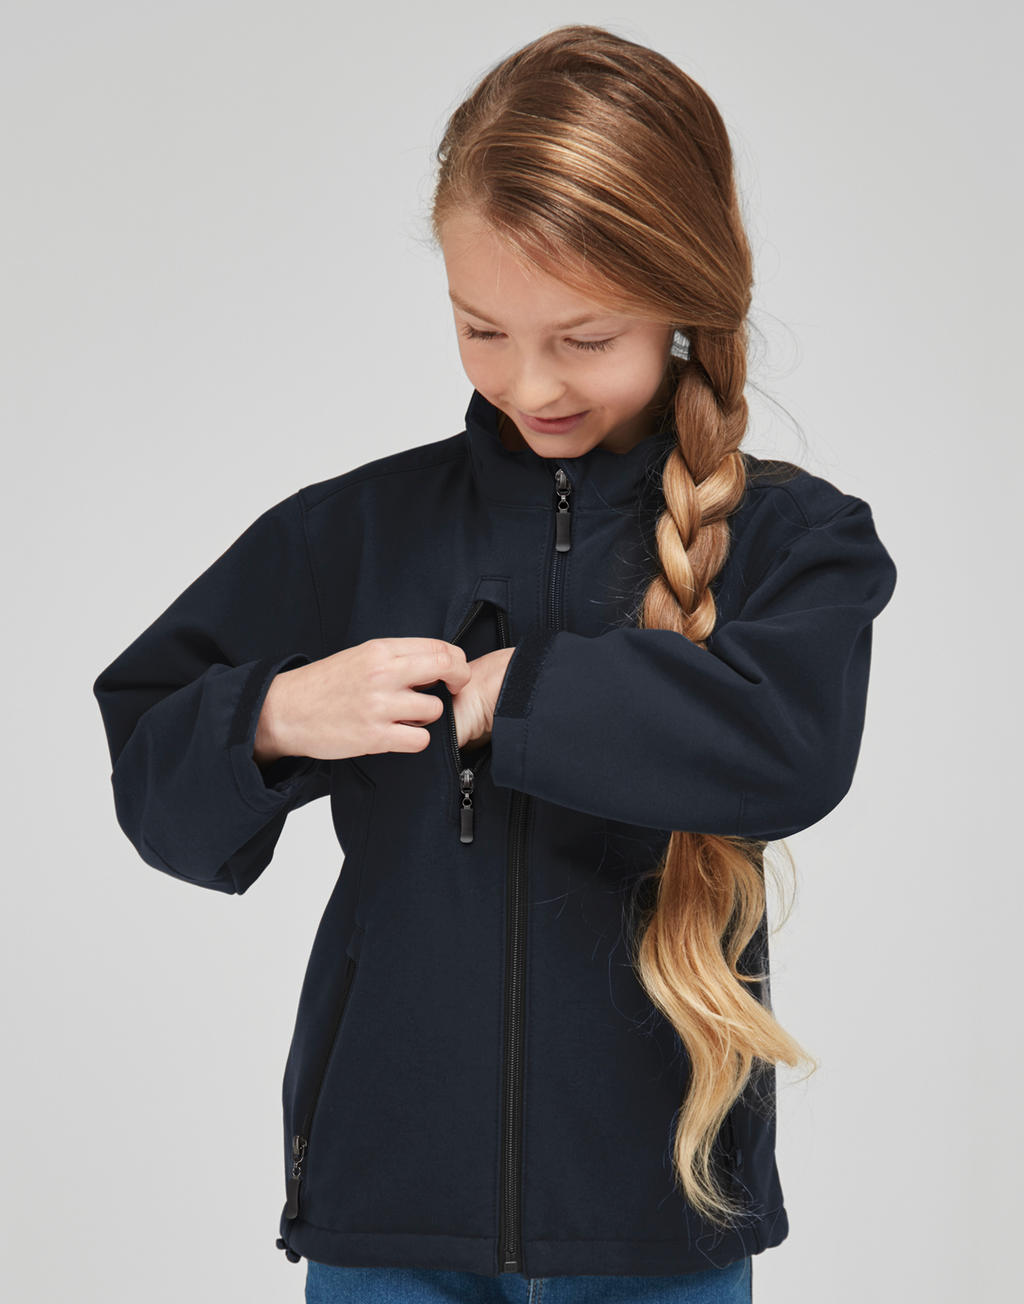  Kids Softshell Jacket in Farbe Black